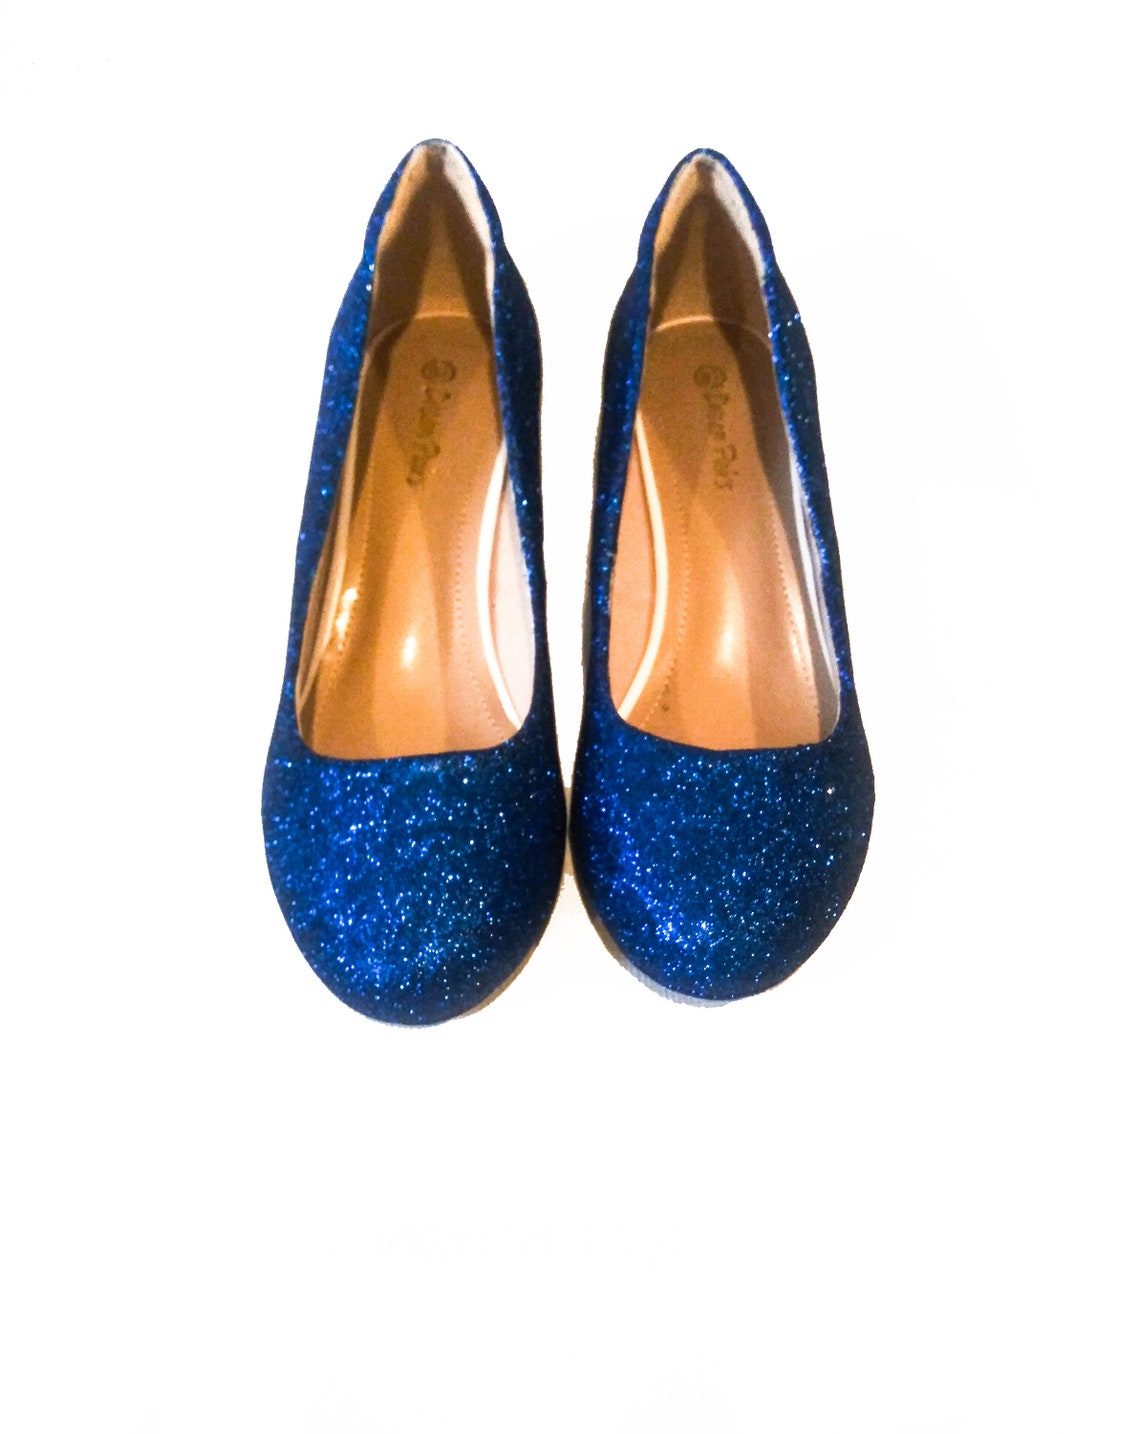 Glitter Heels / Royal Blue Glitter Heels / Wedding Shoes / | Etsy